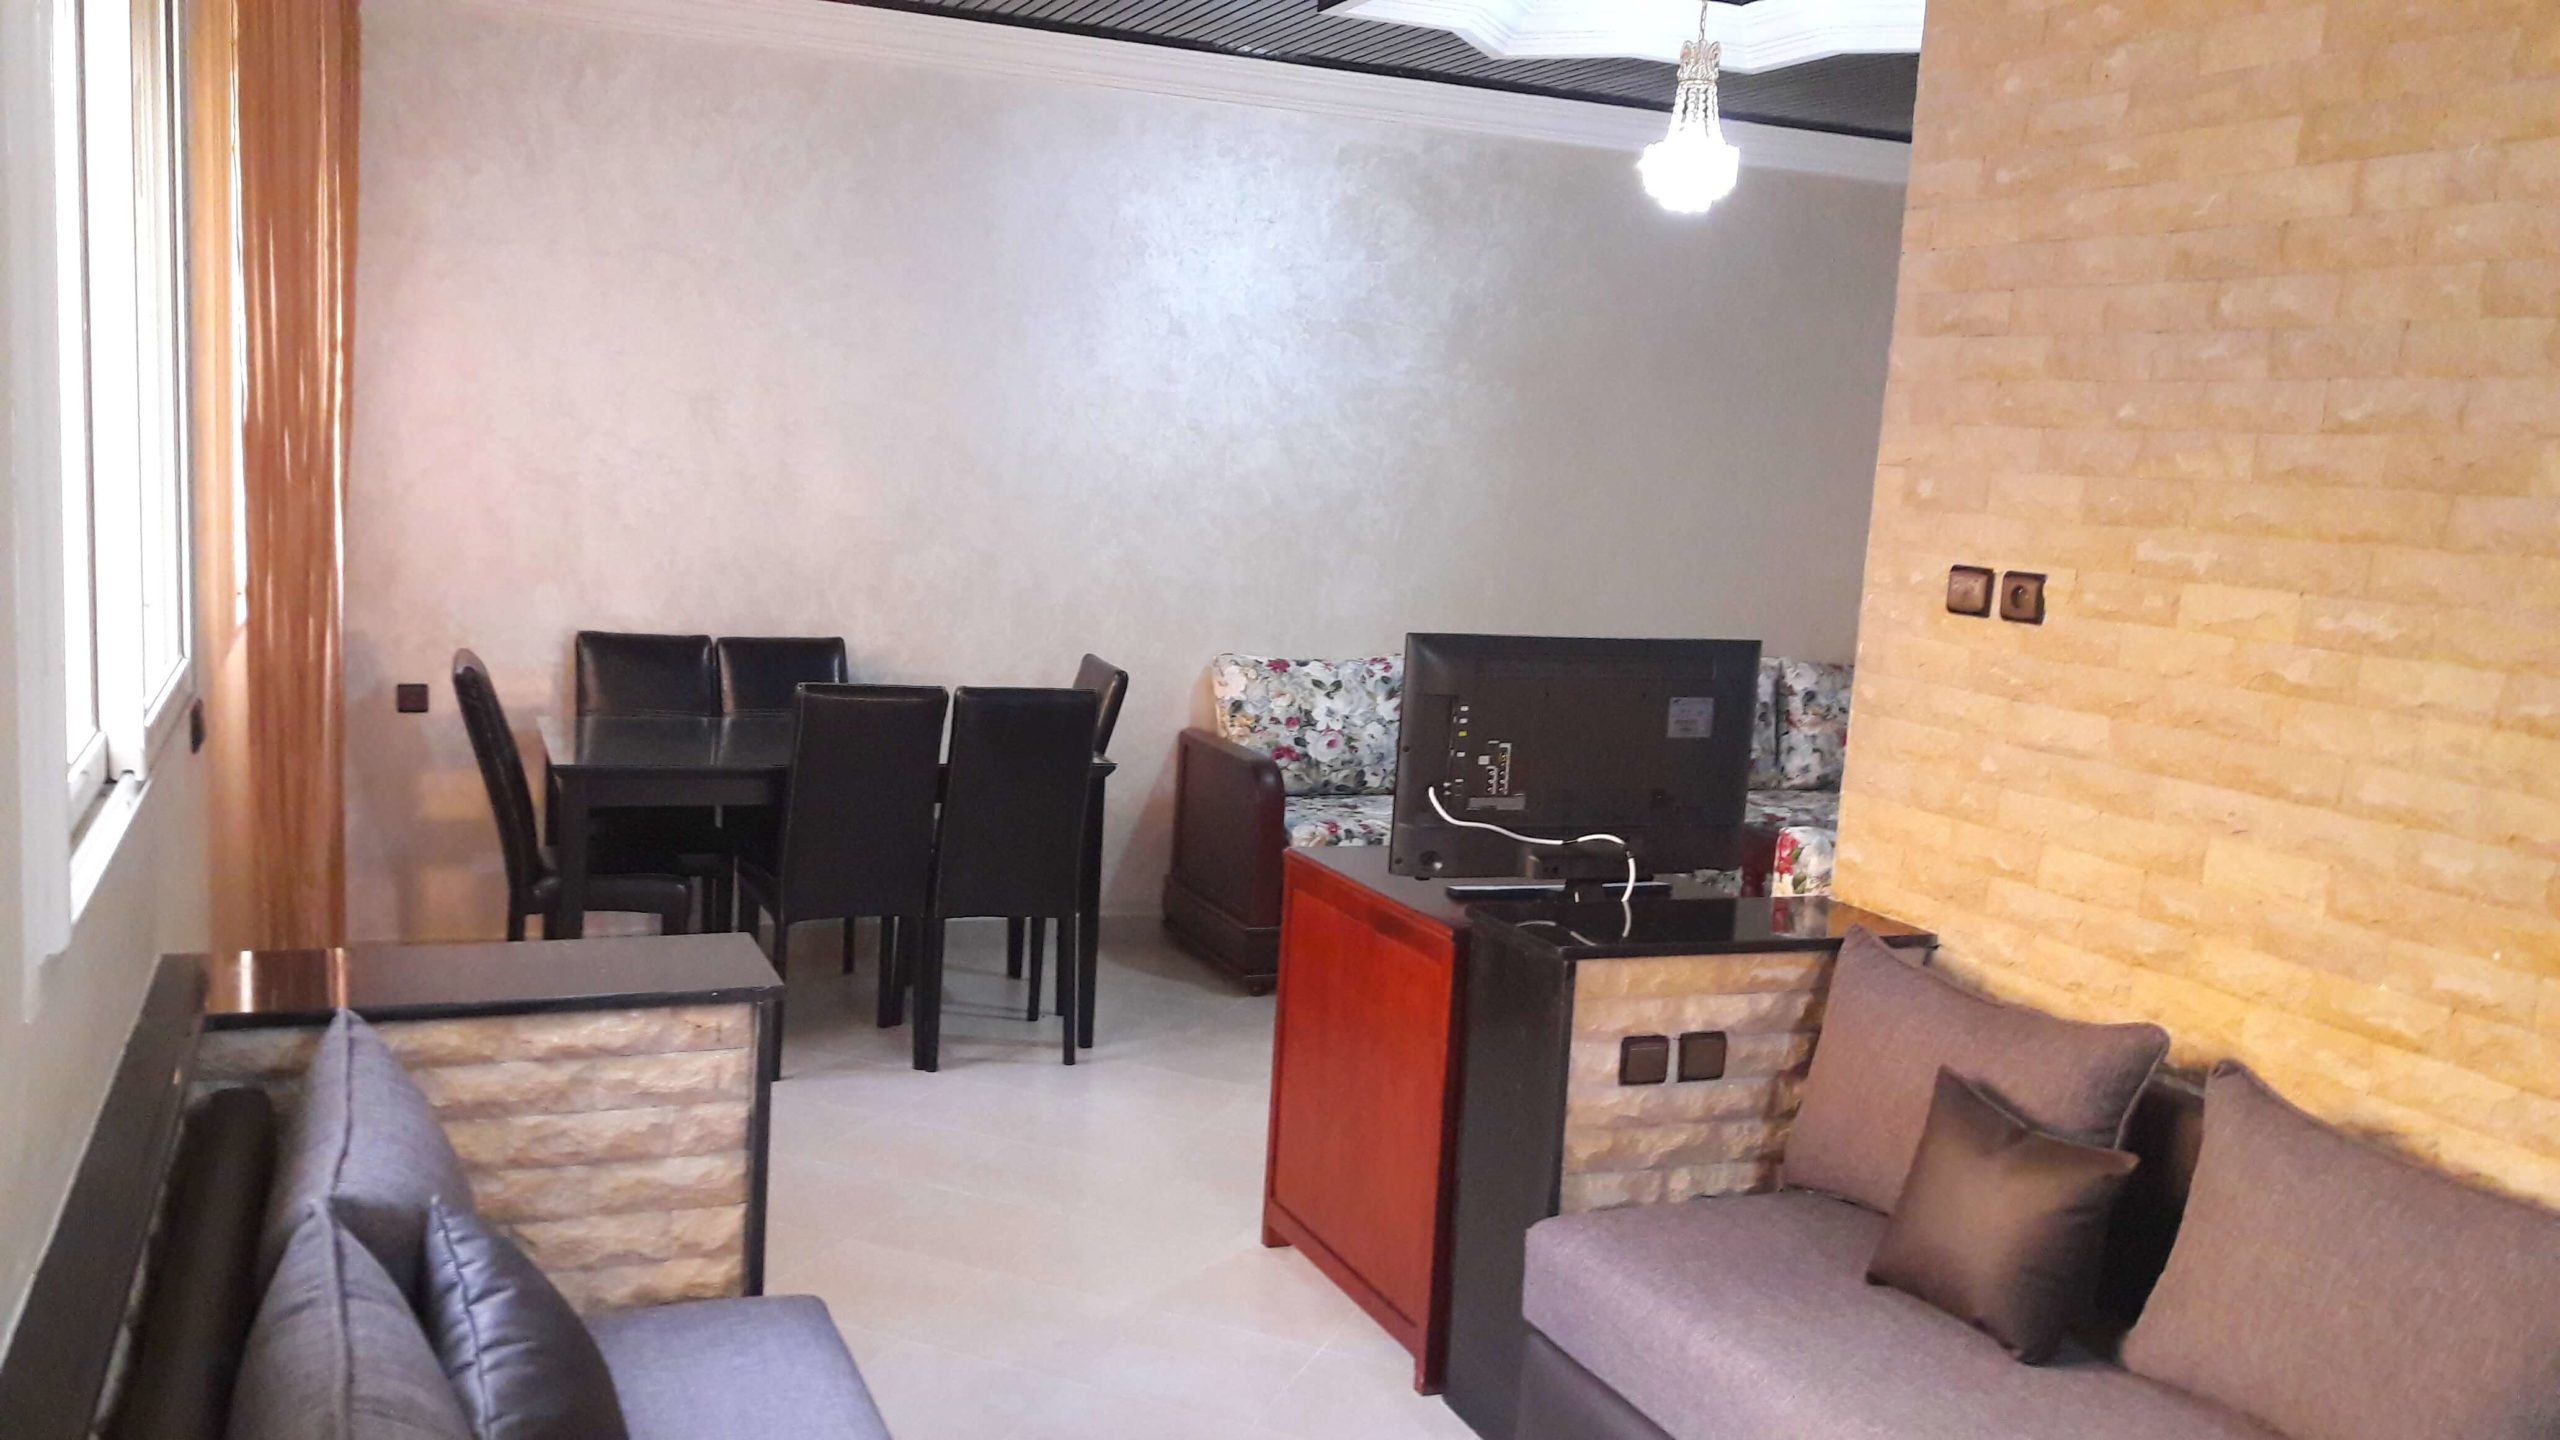 Location appartement Temara Rabat 3 chambres ,salonn, cuisine ,balcon